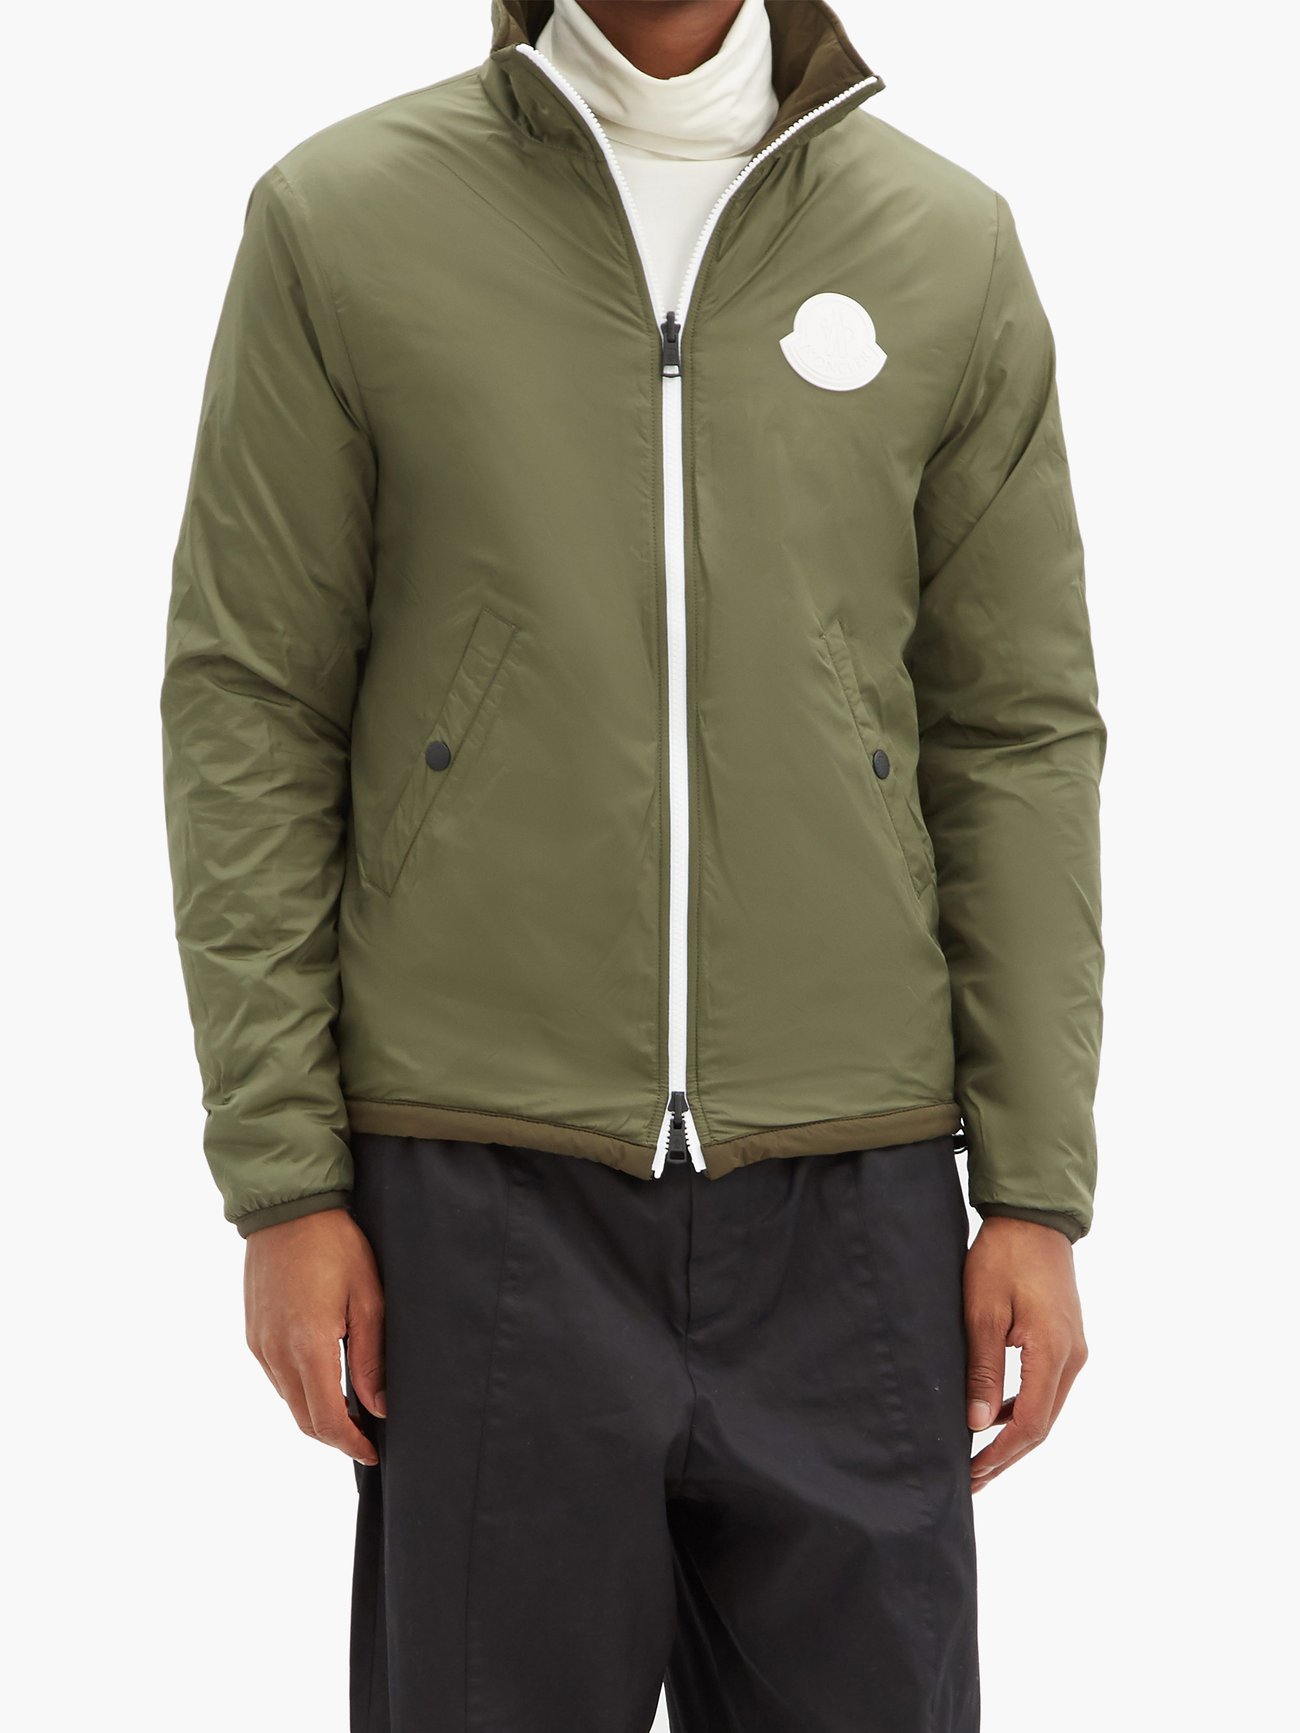 Valentino Camouflage-Pattern Fleece Jacket